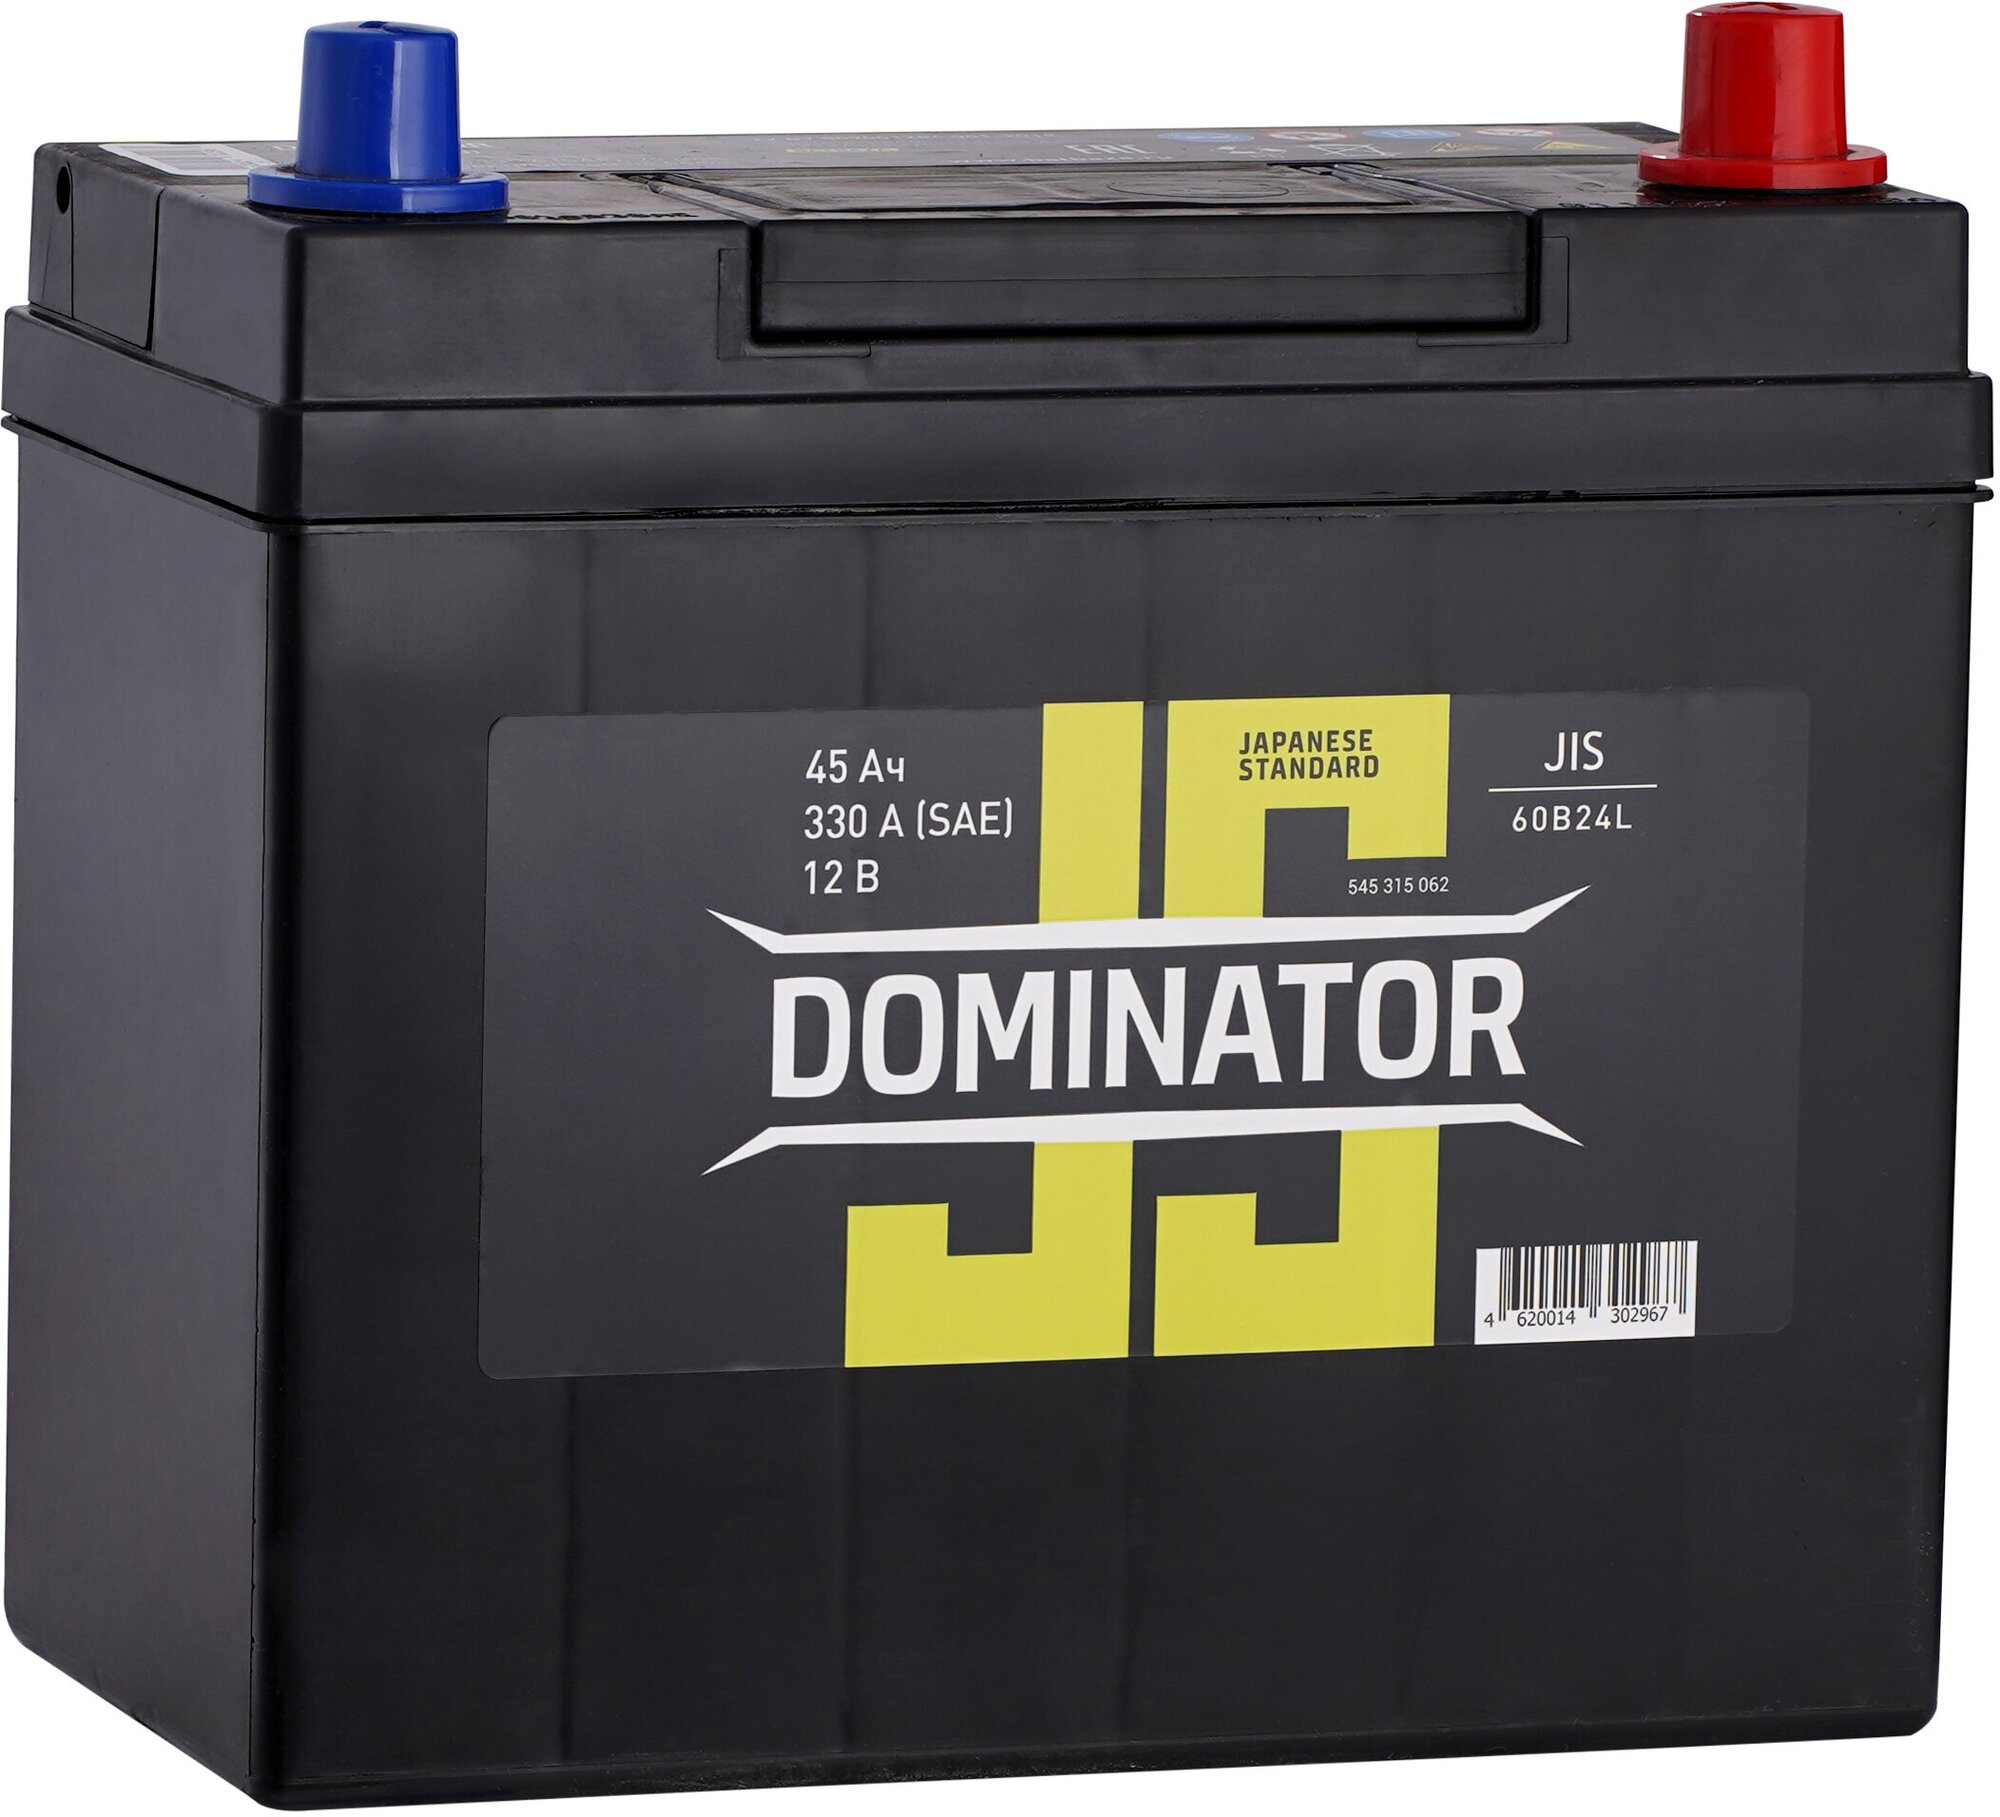 Автомобильный аккумулятор DOMINATOR (JIS) 6CT-45 А (0) B24L (арт. 545315062)